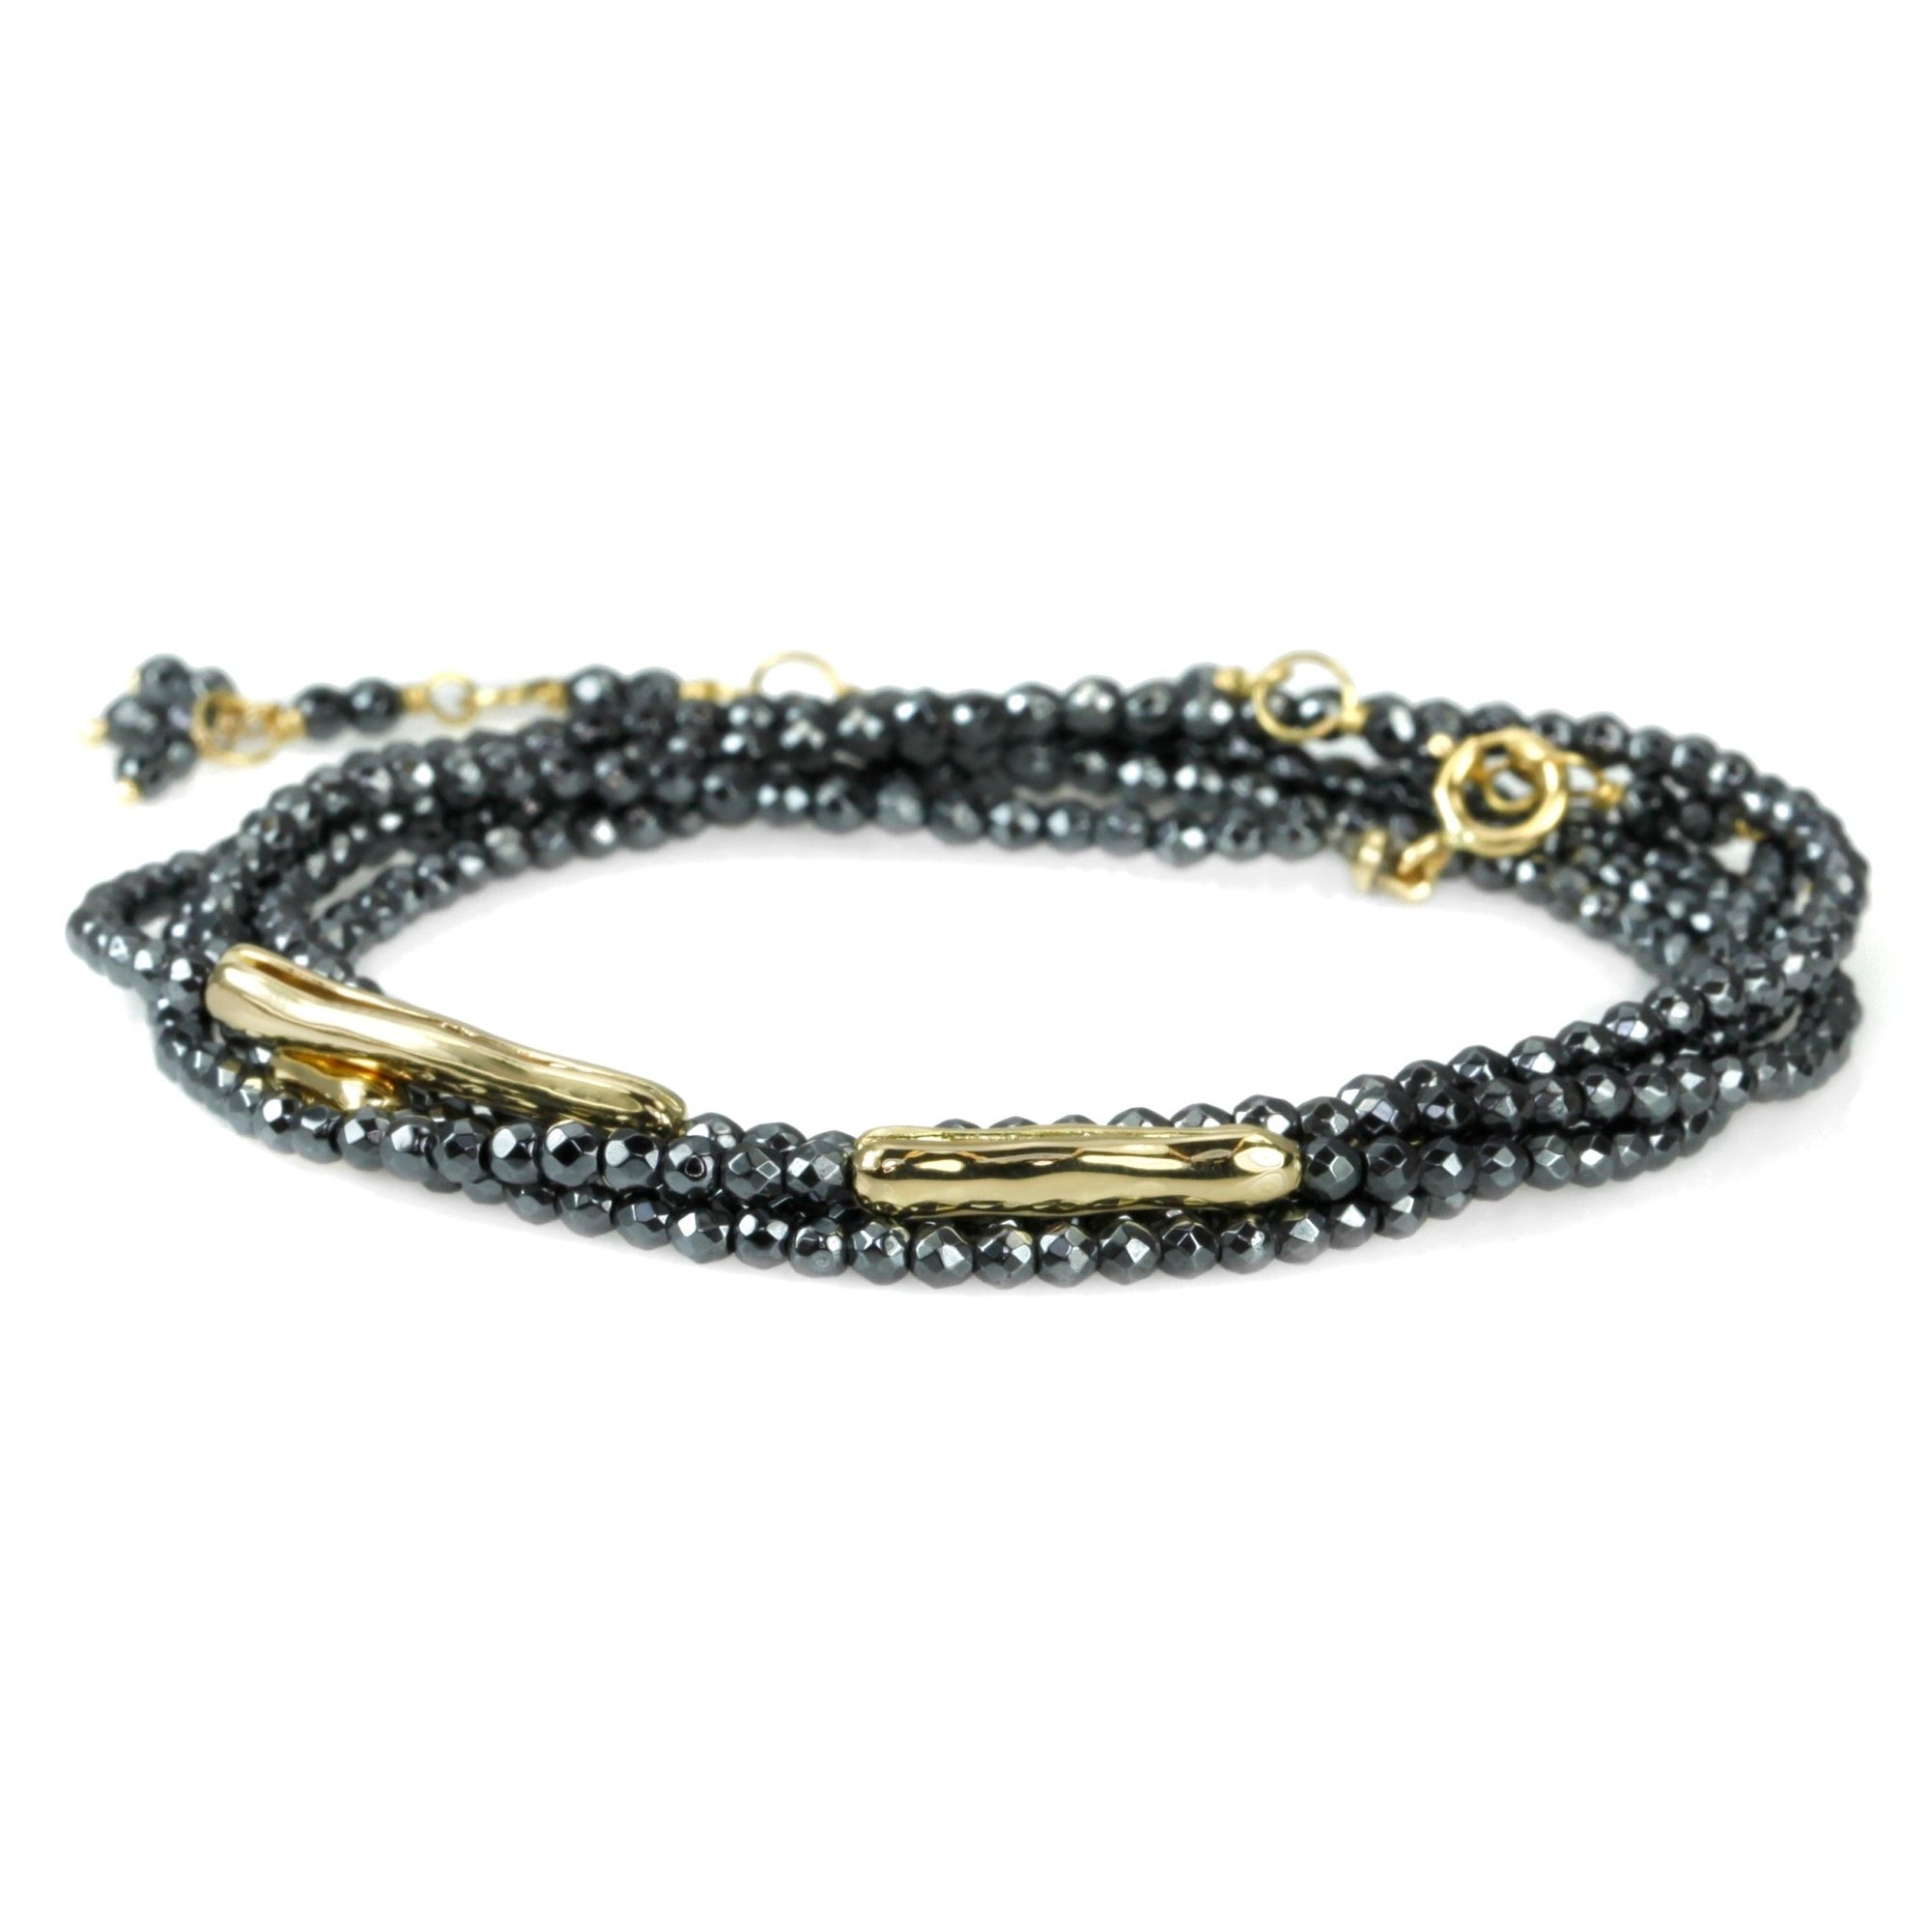 Anne Sportun Hematite Beaded Wrap Bracelet with &quot;Organic Log&quot; Beads